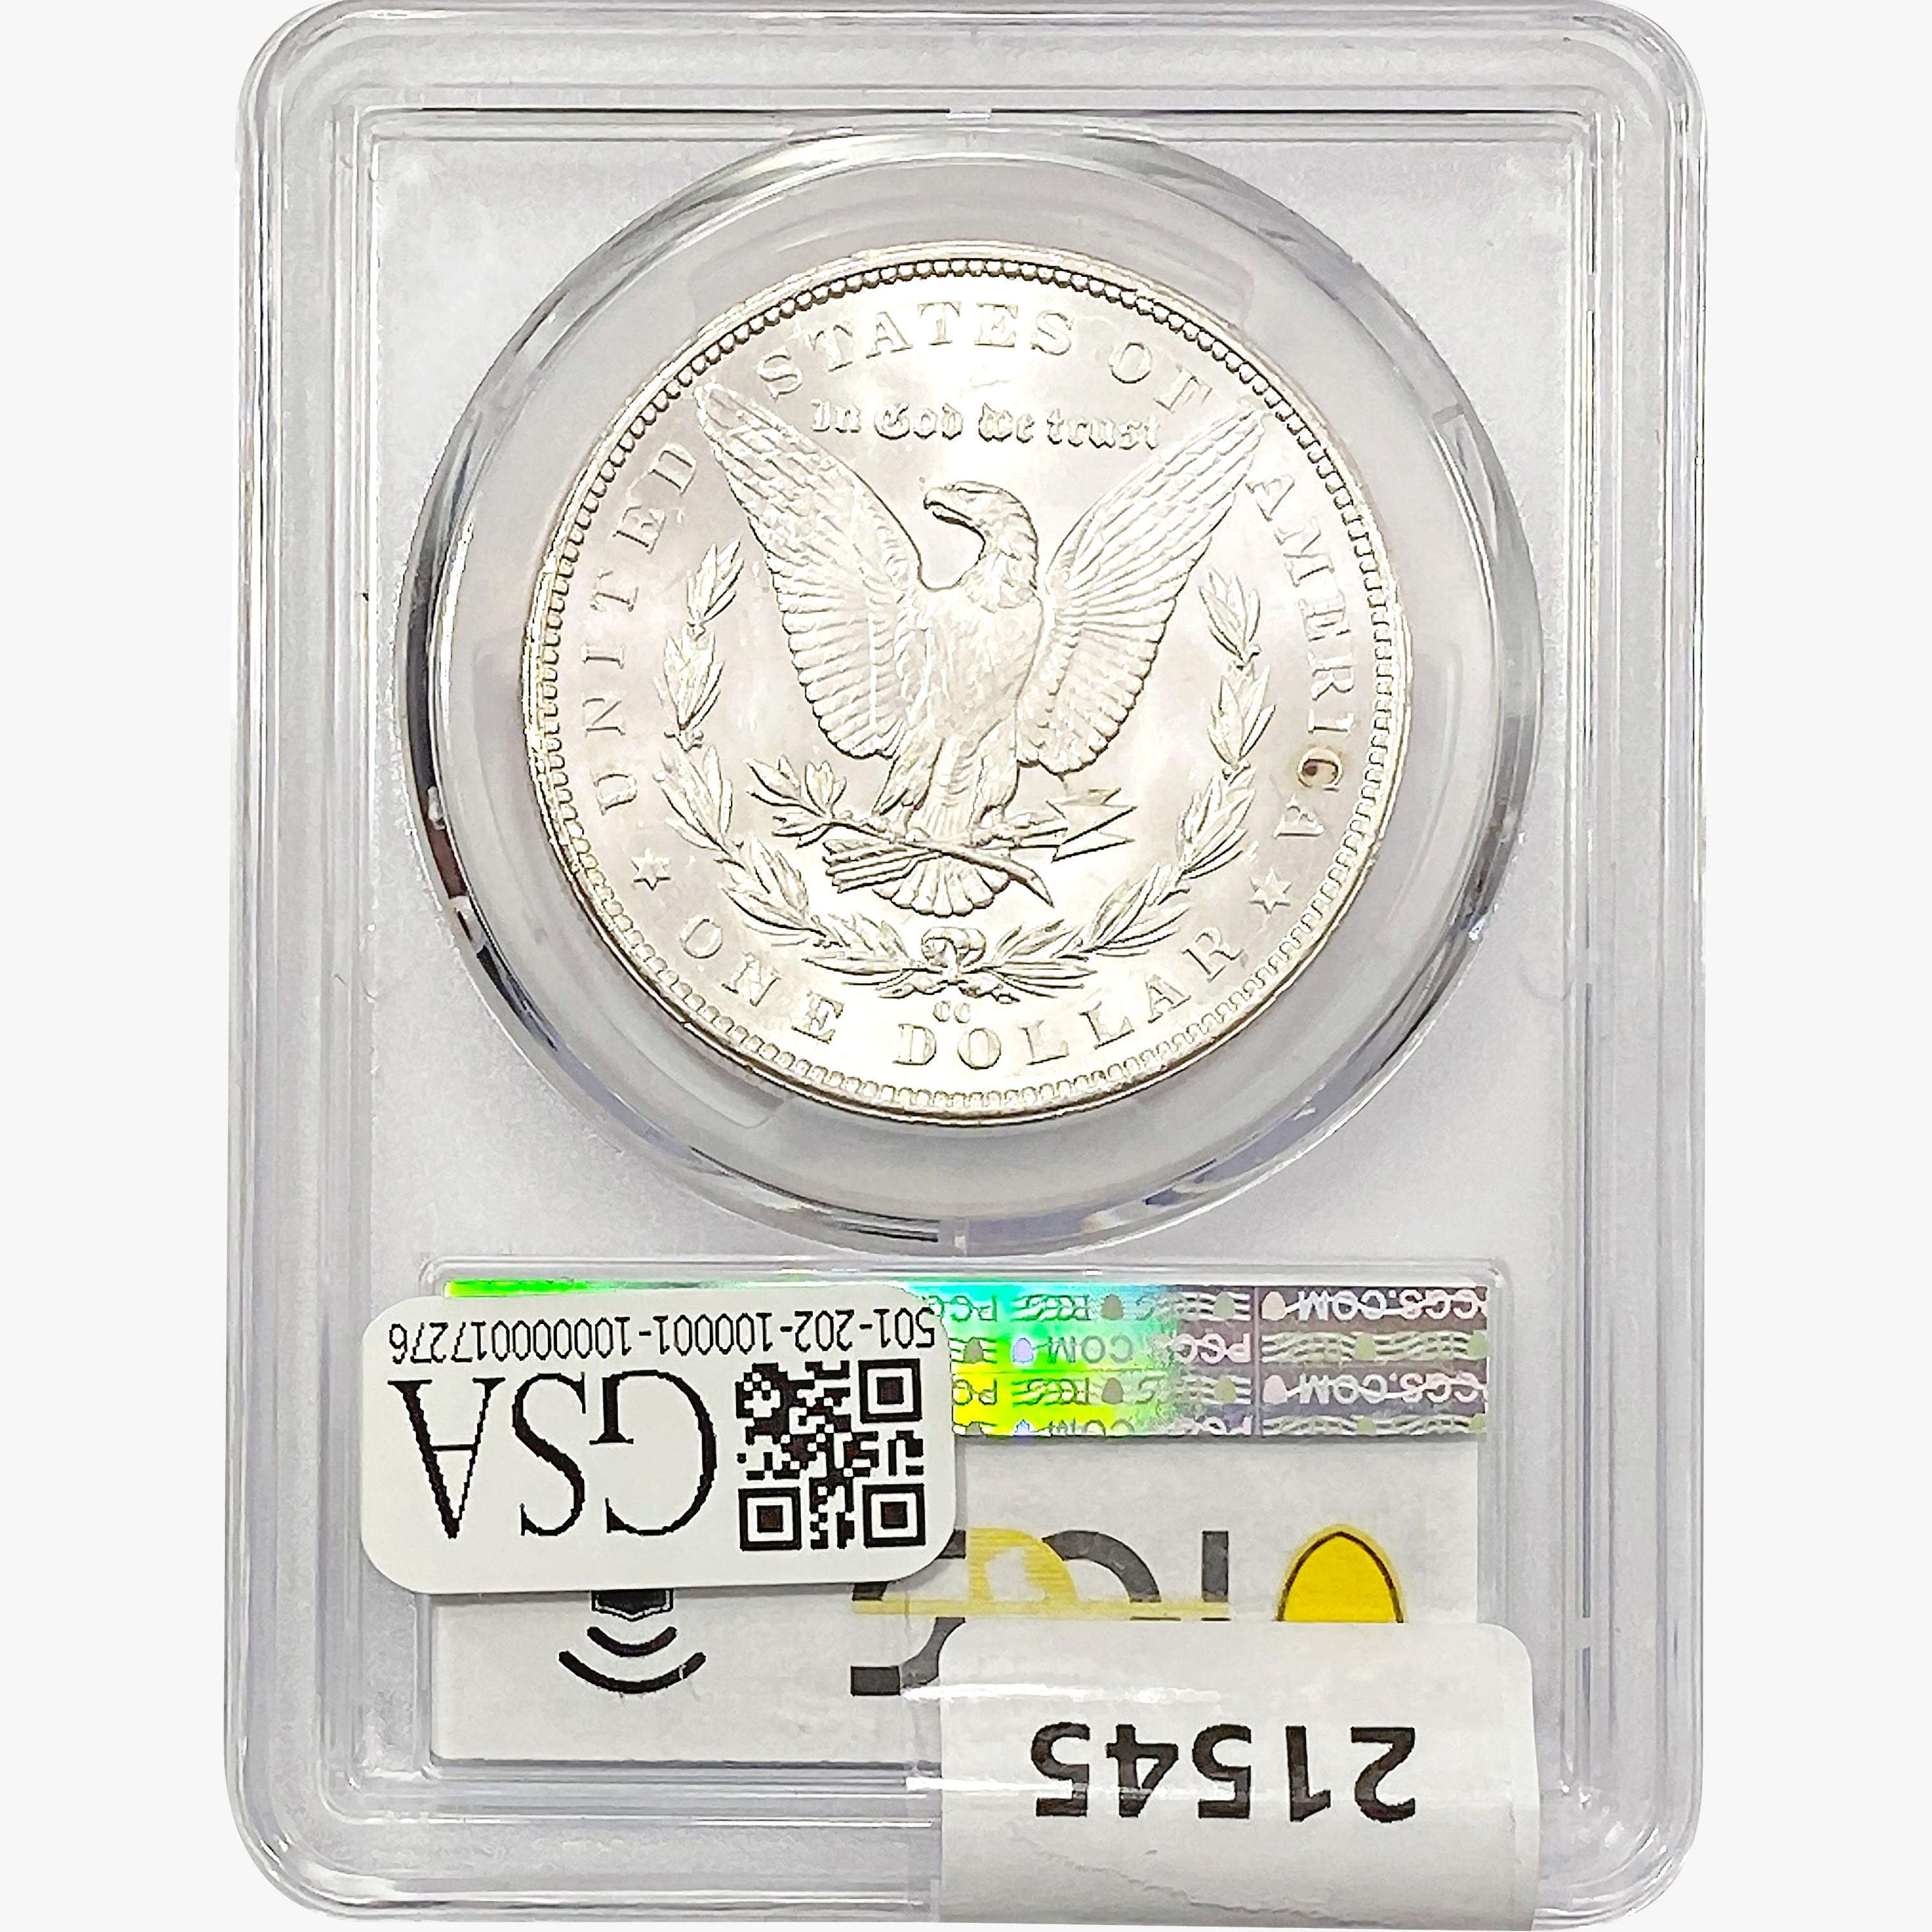 1883-CC Morgan Silver Dollar PCGS MS65